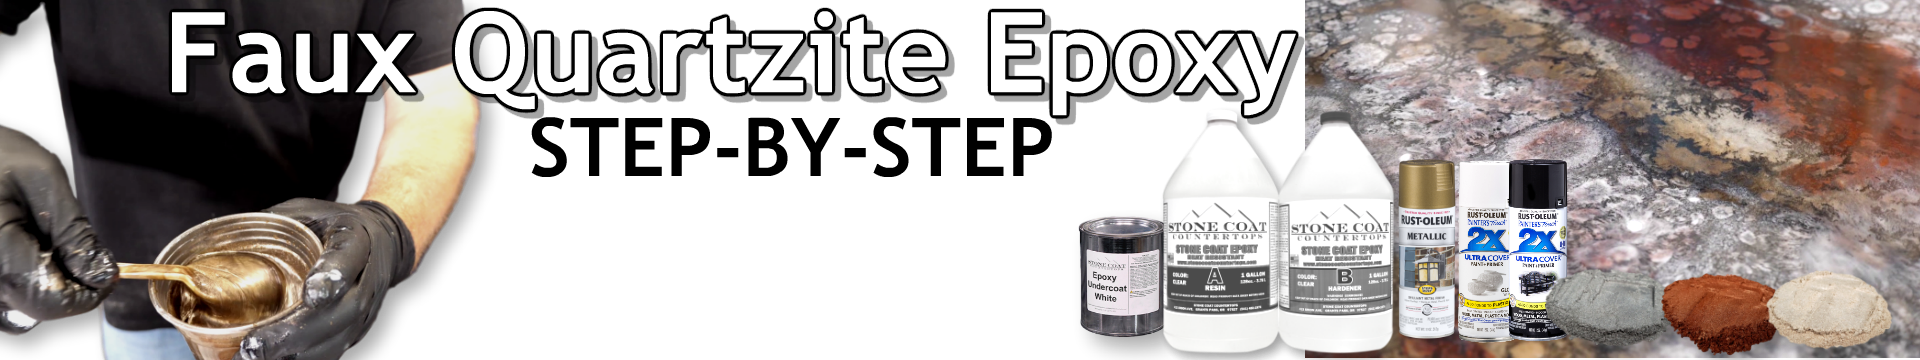 Faux Quartzite Epoxy Banner